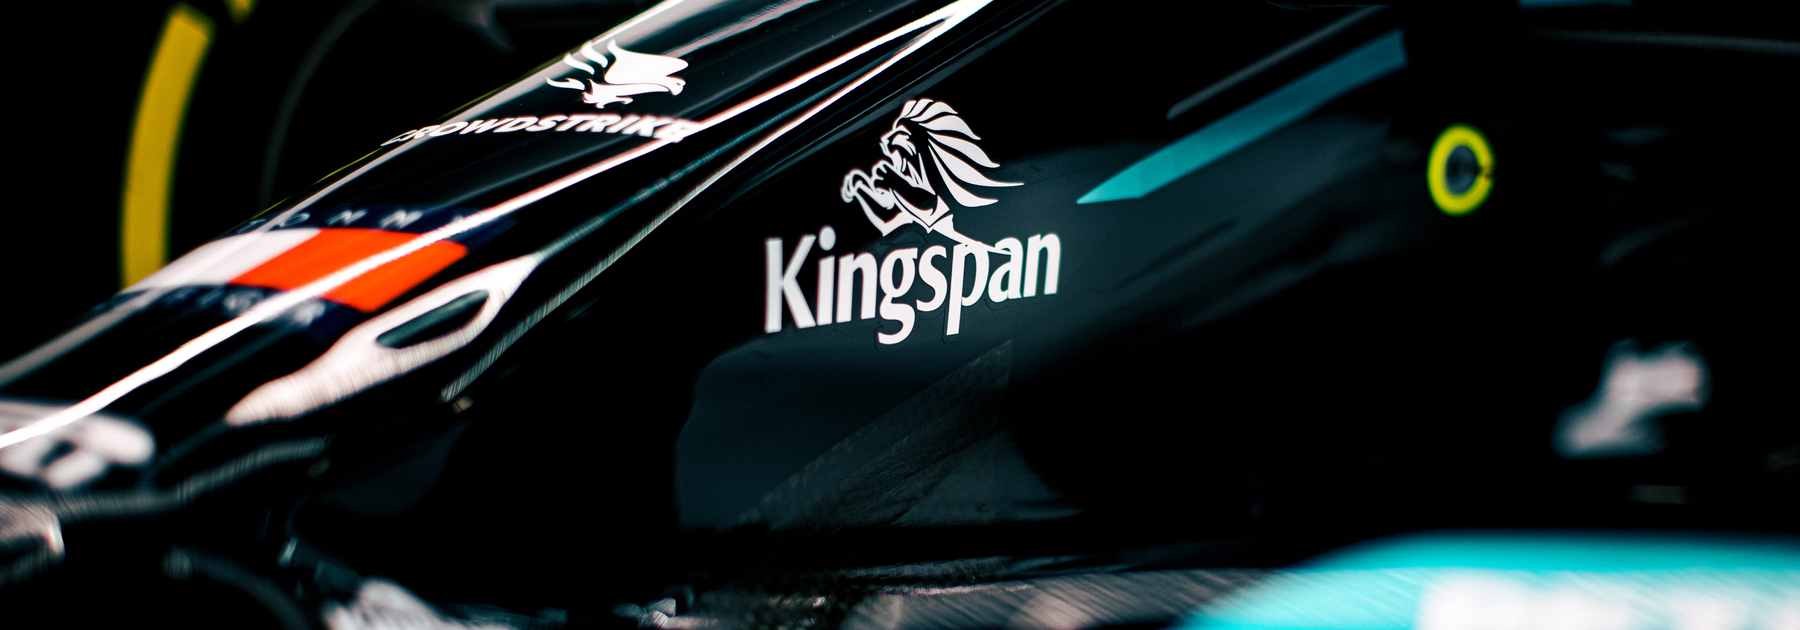 Mercedes terminates Kingspan sponsorship deal